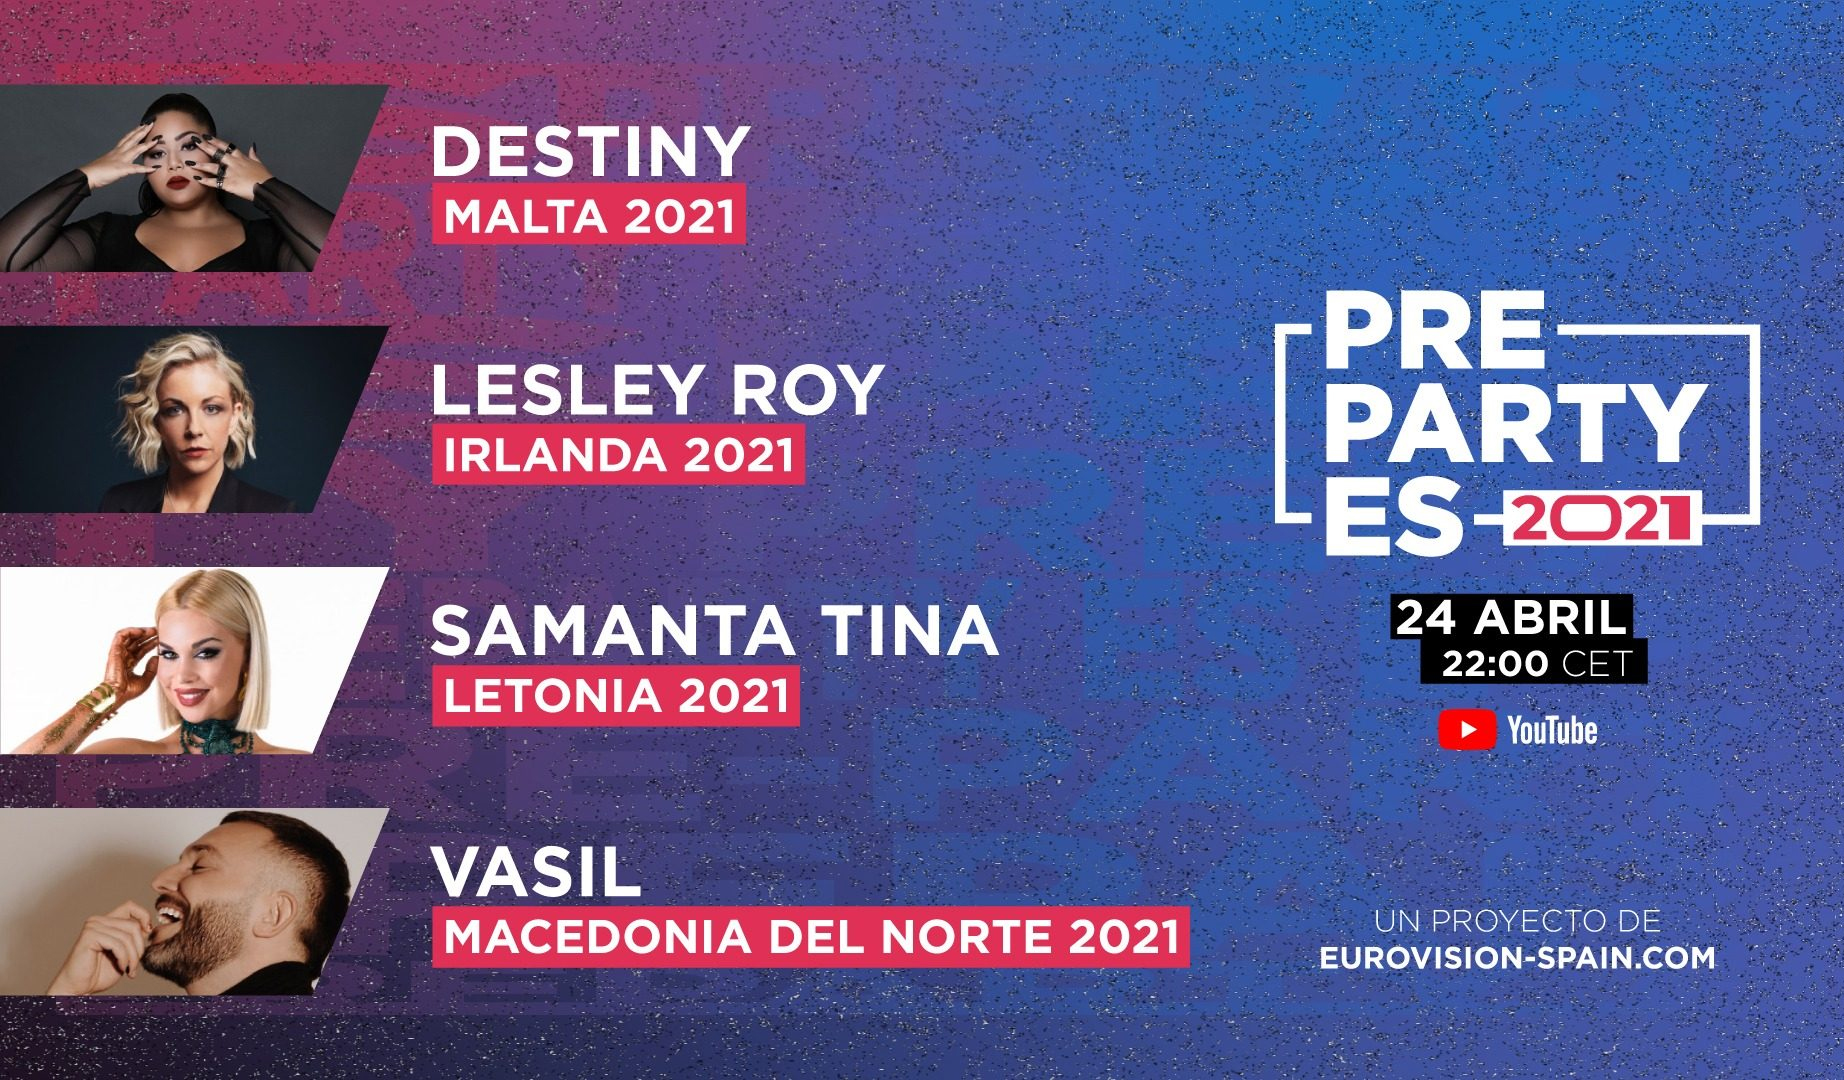 ¡Destiny, Samanta Tina, Lesley Roy y Vasil se unen a la PrePartyES 2021!